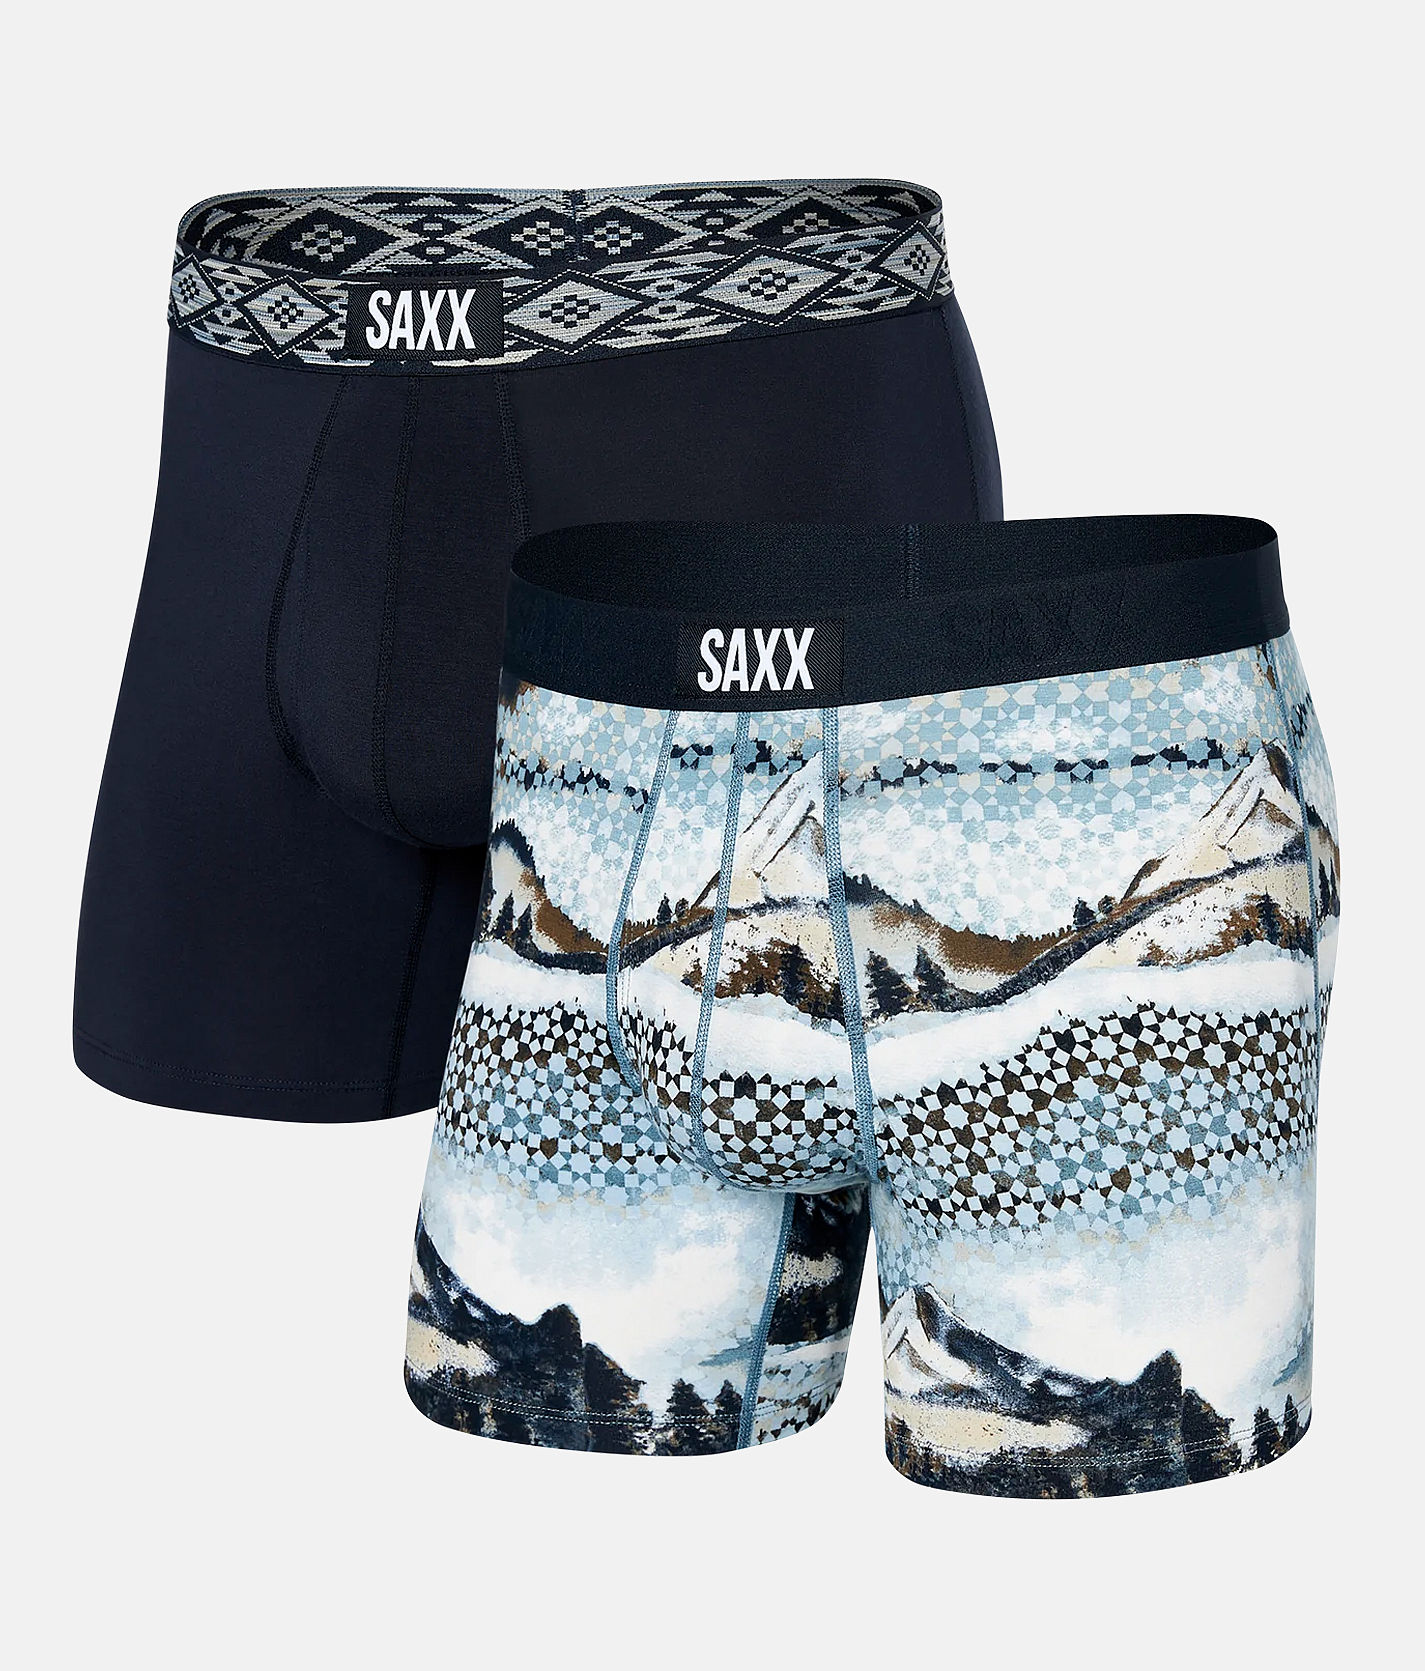 Saxx Undercover Boxer Brief 2 Pack - Men's - Shoplifestyle